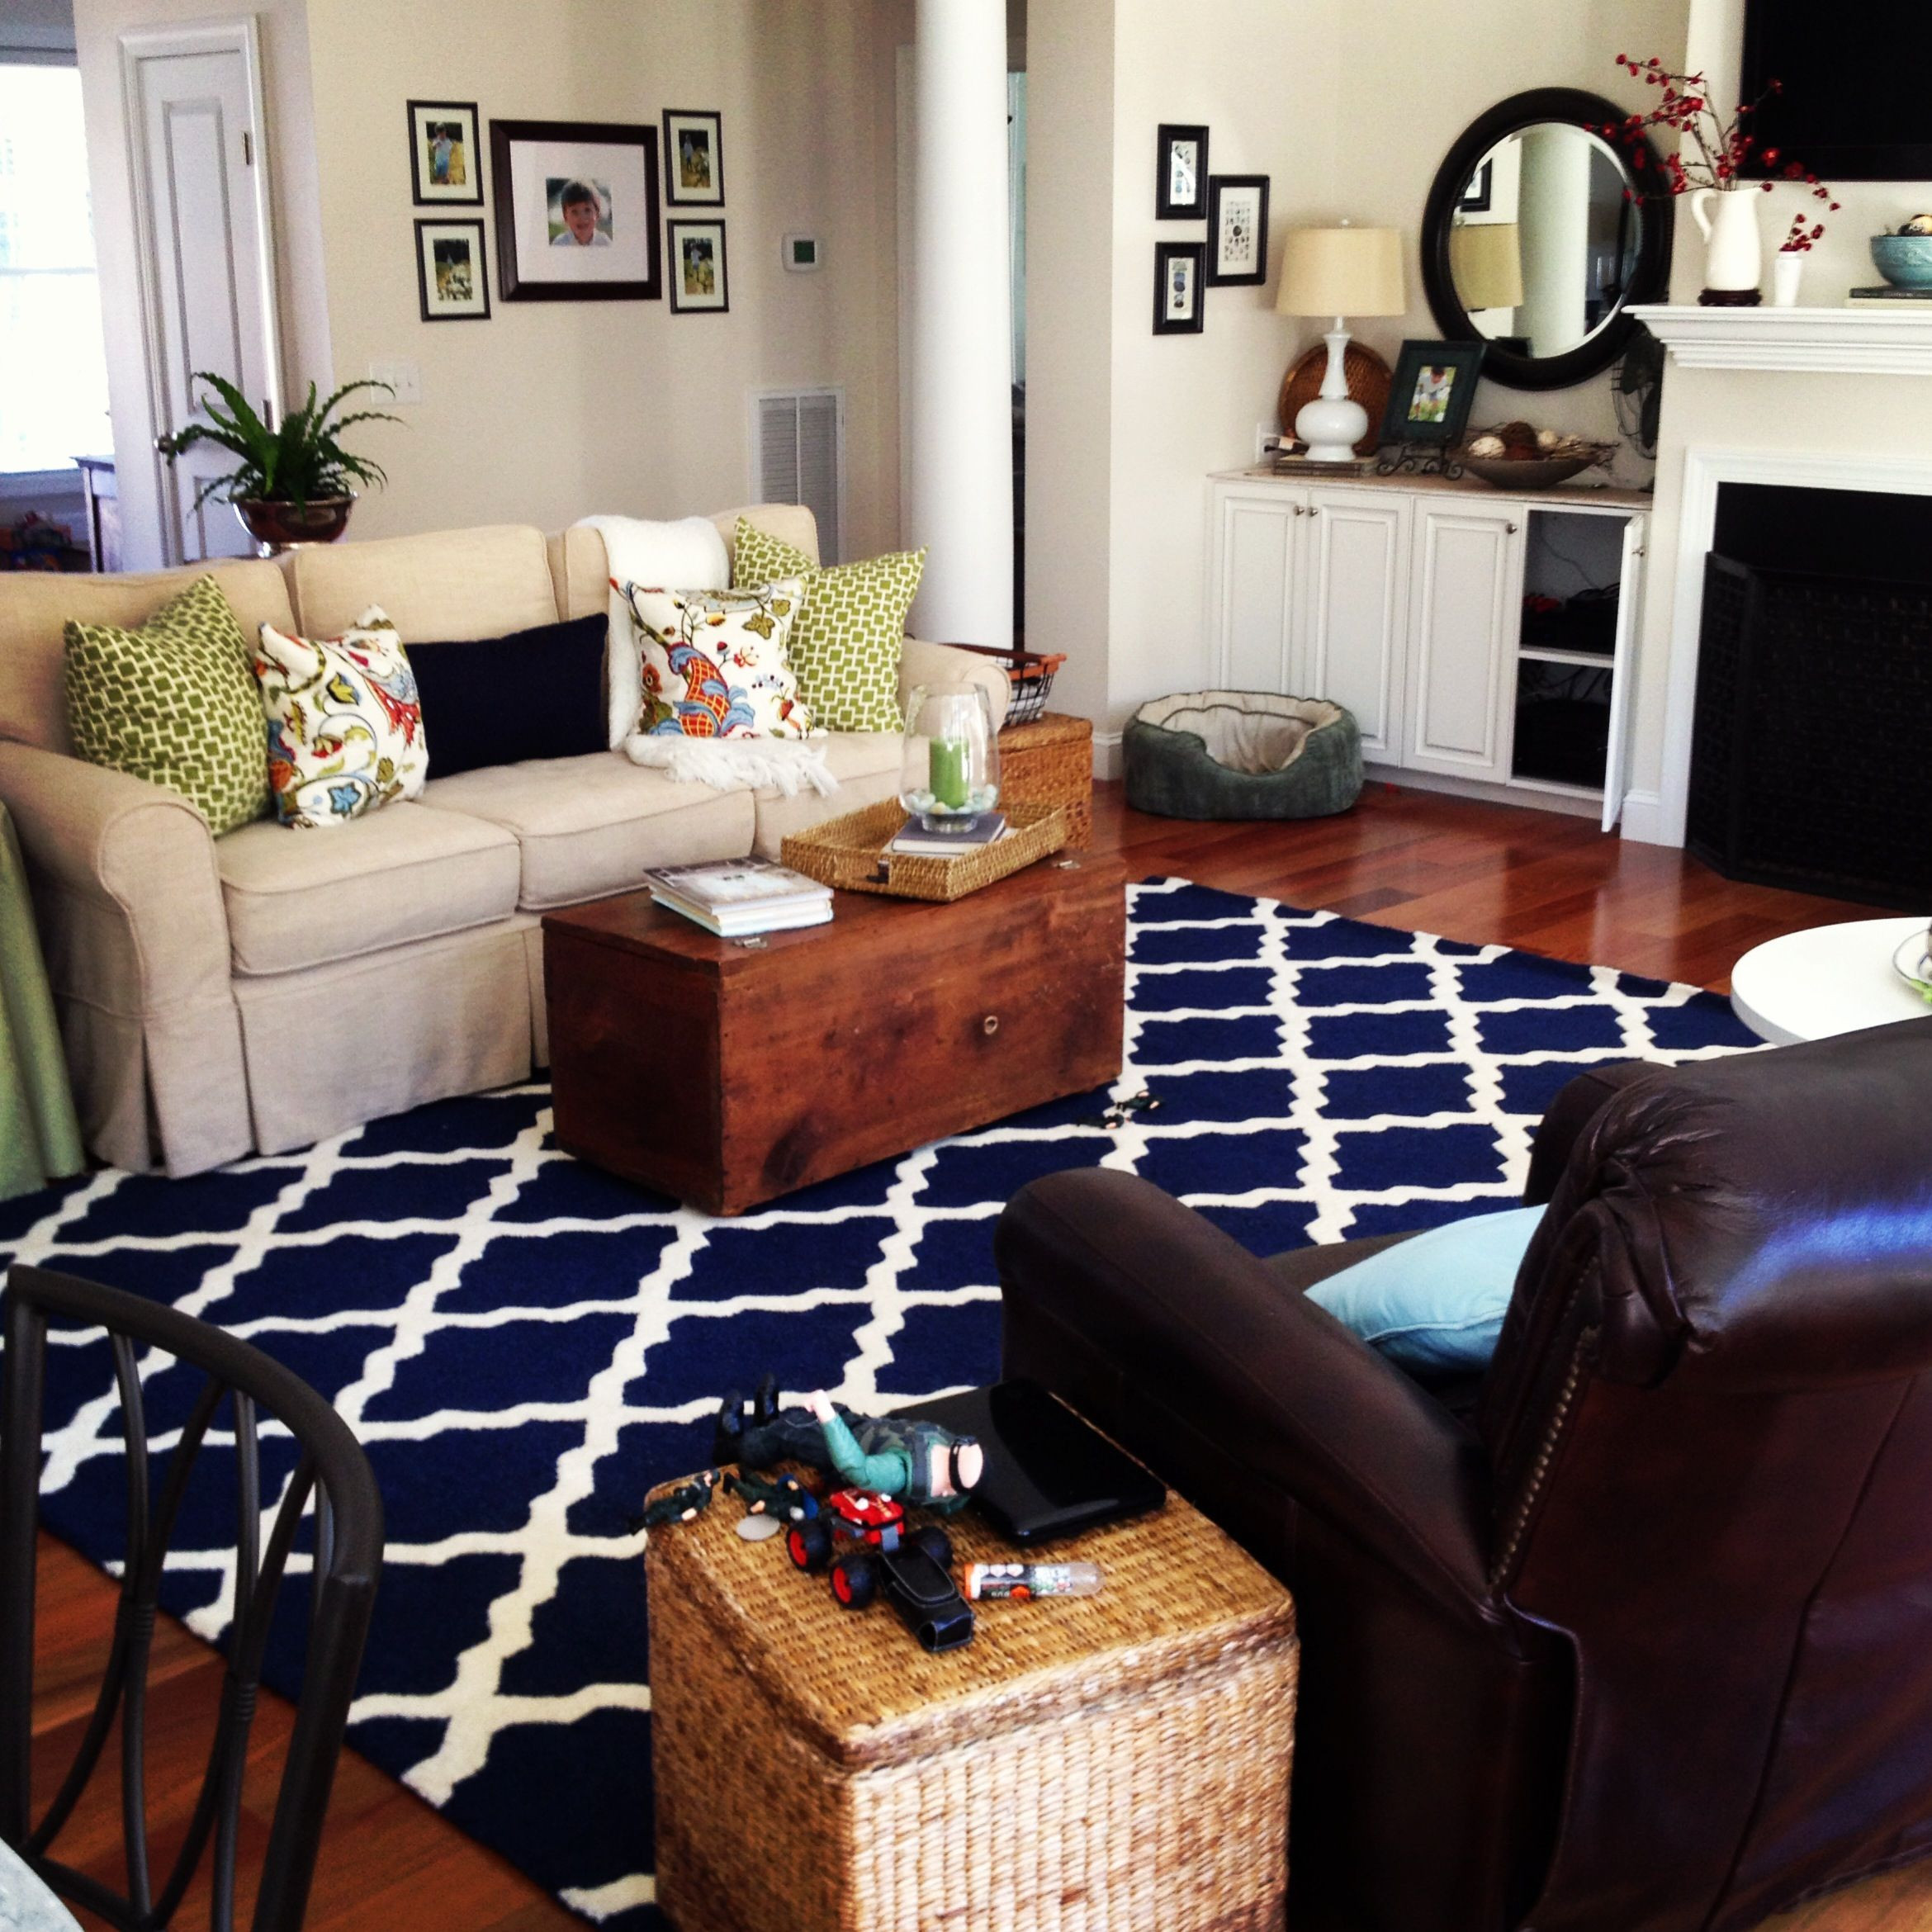 Living Room Rug Ideas
 The 25 best Living room rugs ideas on Pinterest